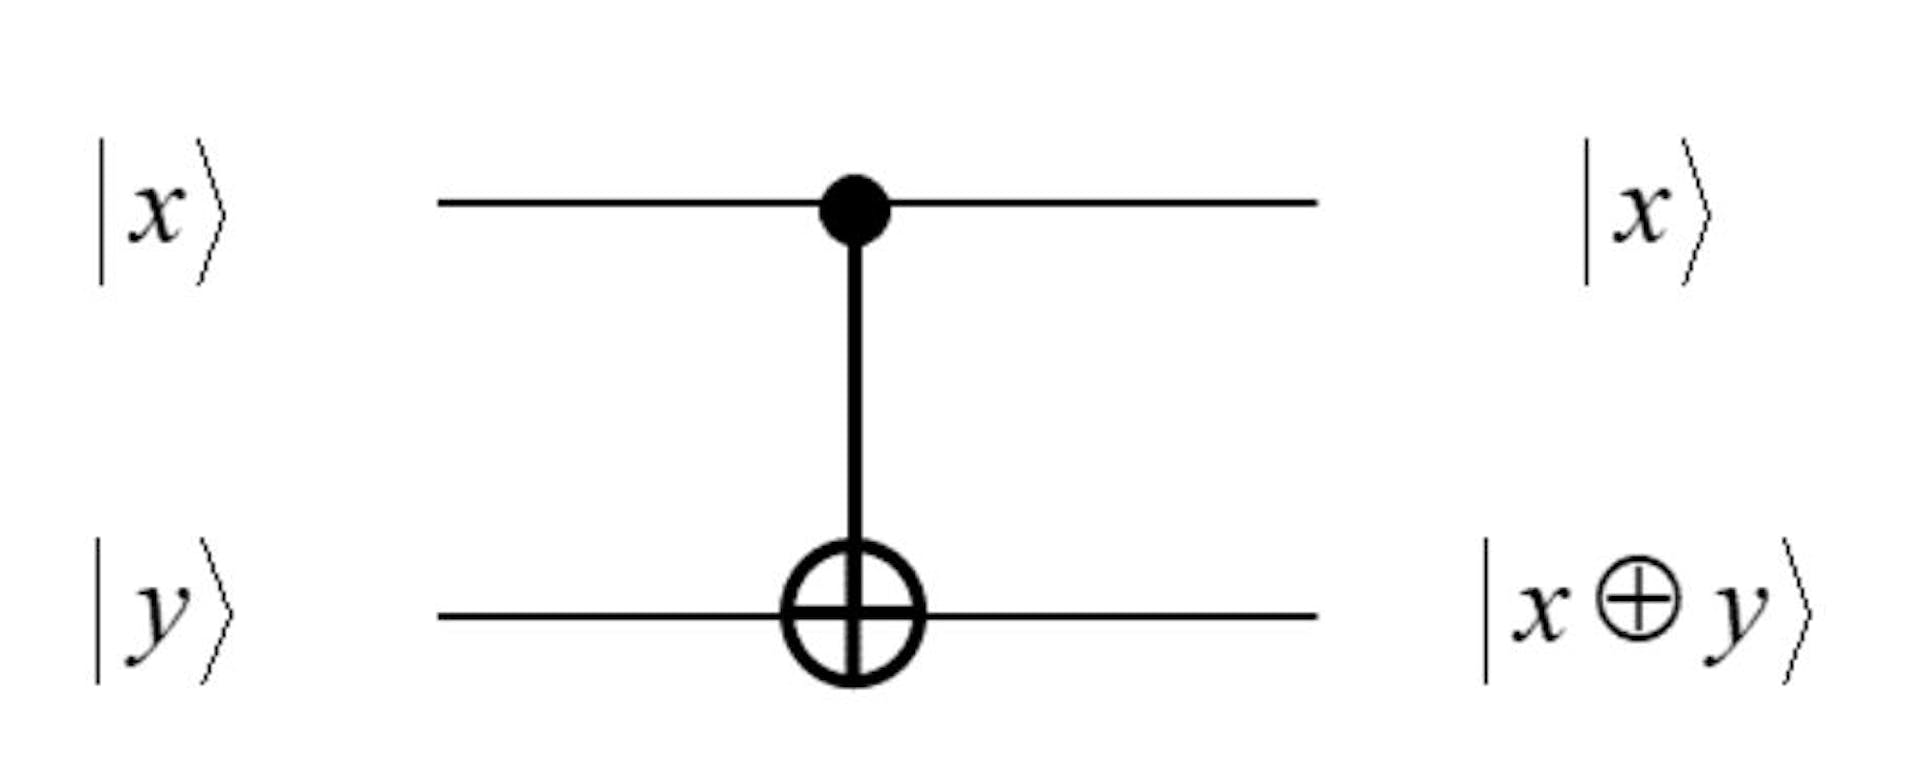 CNOT kapısı --> Kaynak - https://quantumcomputing.stackexchange.com/questions/8444/input-and-output-qubit-notation-in-quantum-gates